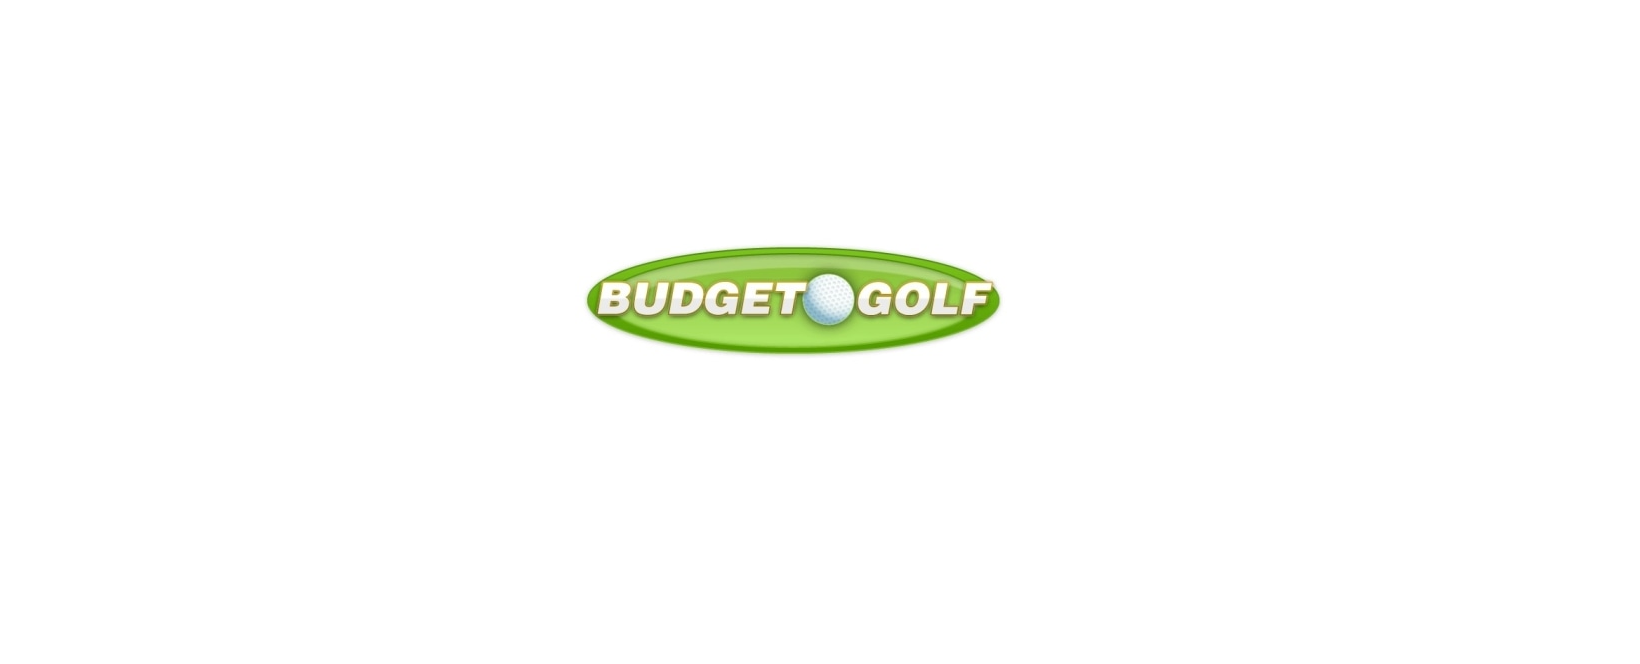 Budget Golf Discount Code 2022